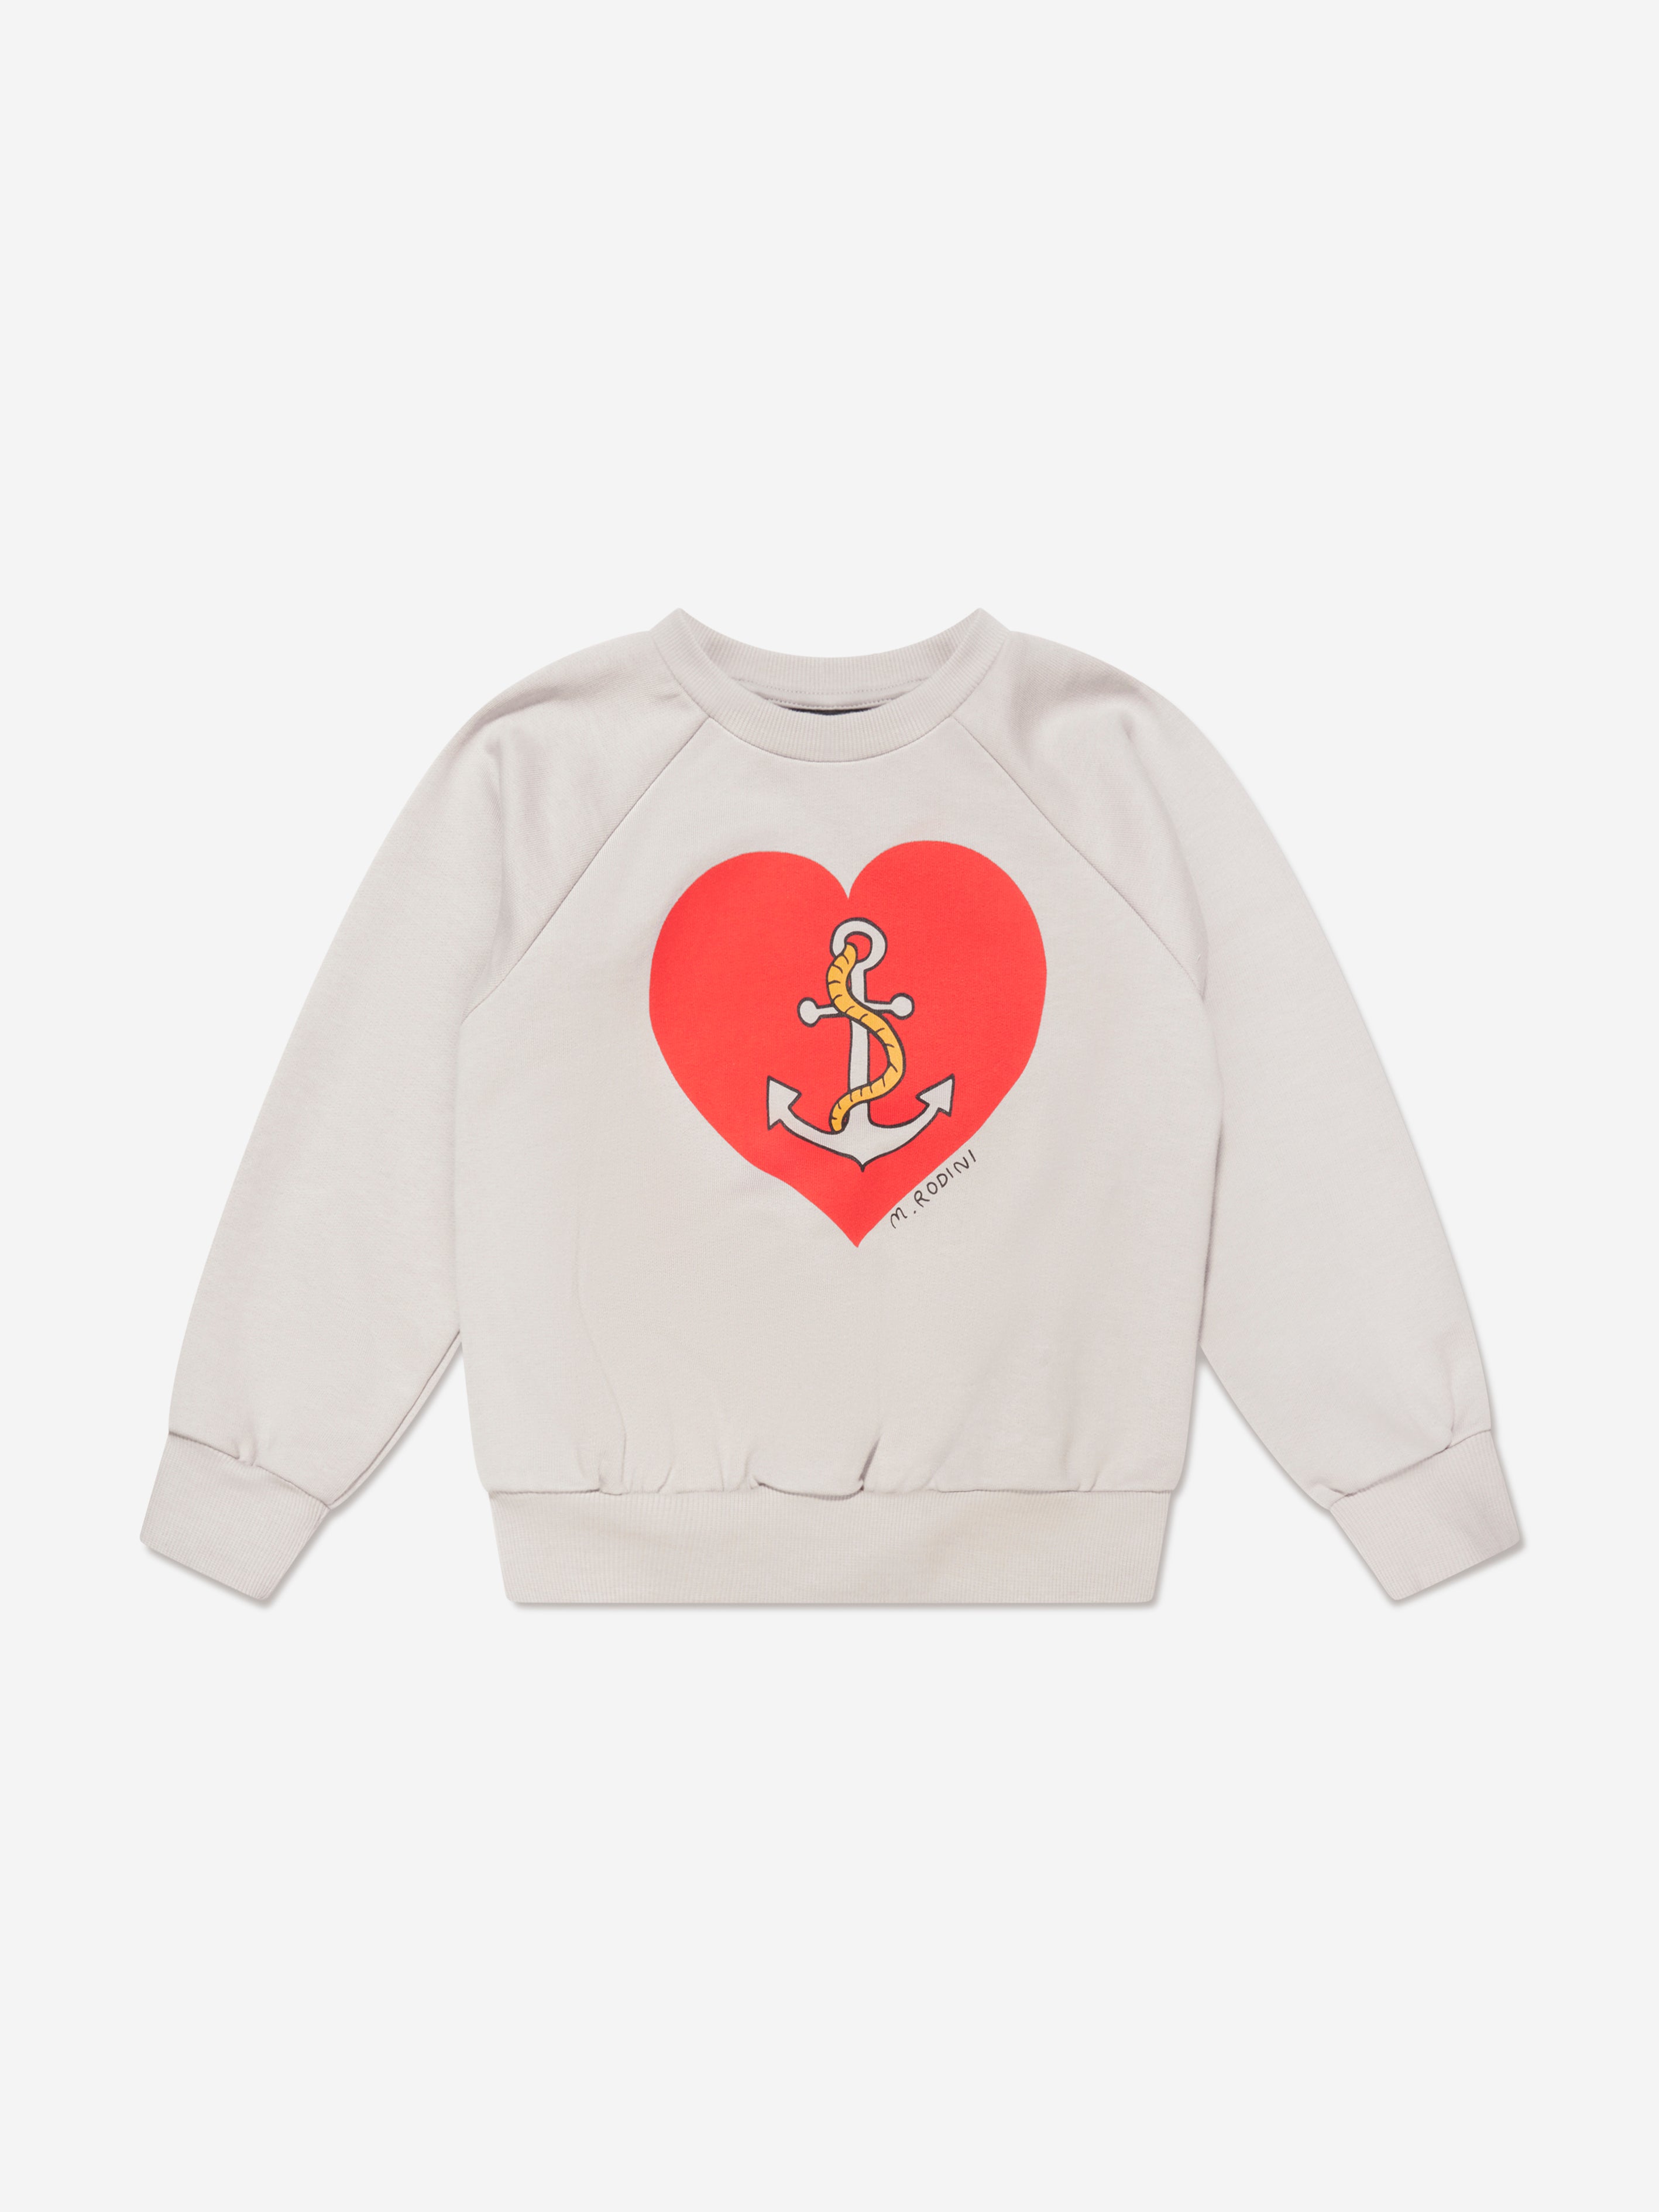 Mini Rodini Kids Sailors Heart Sweatshirt In White